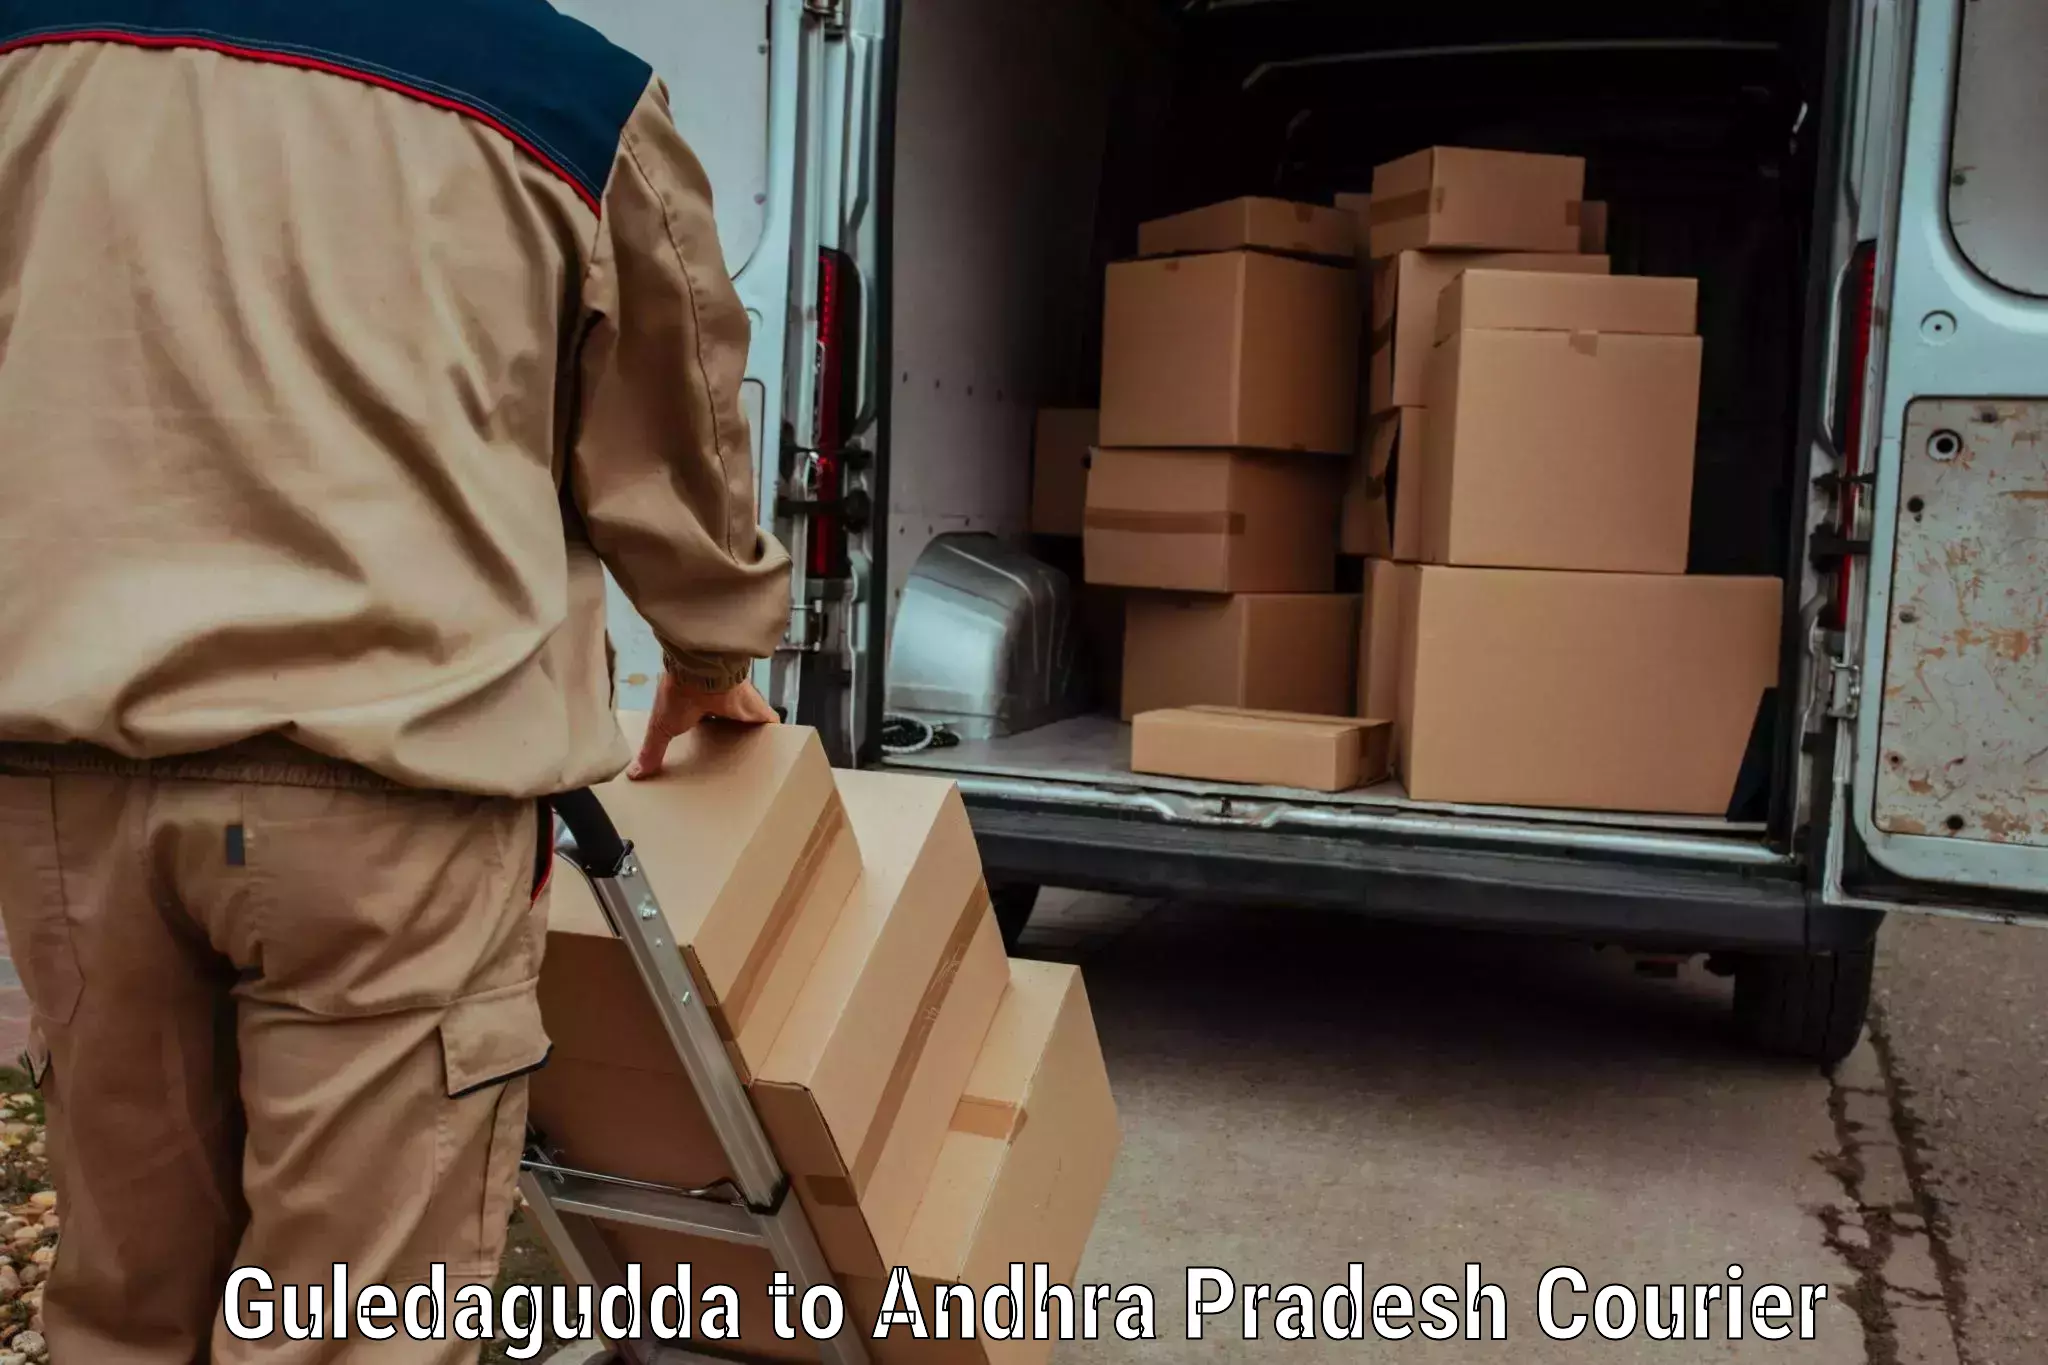 Express mail solutions Guledagudda to Tirupati